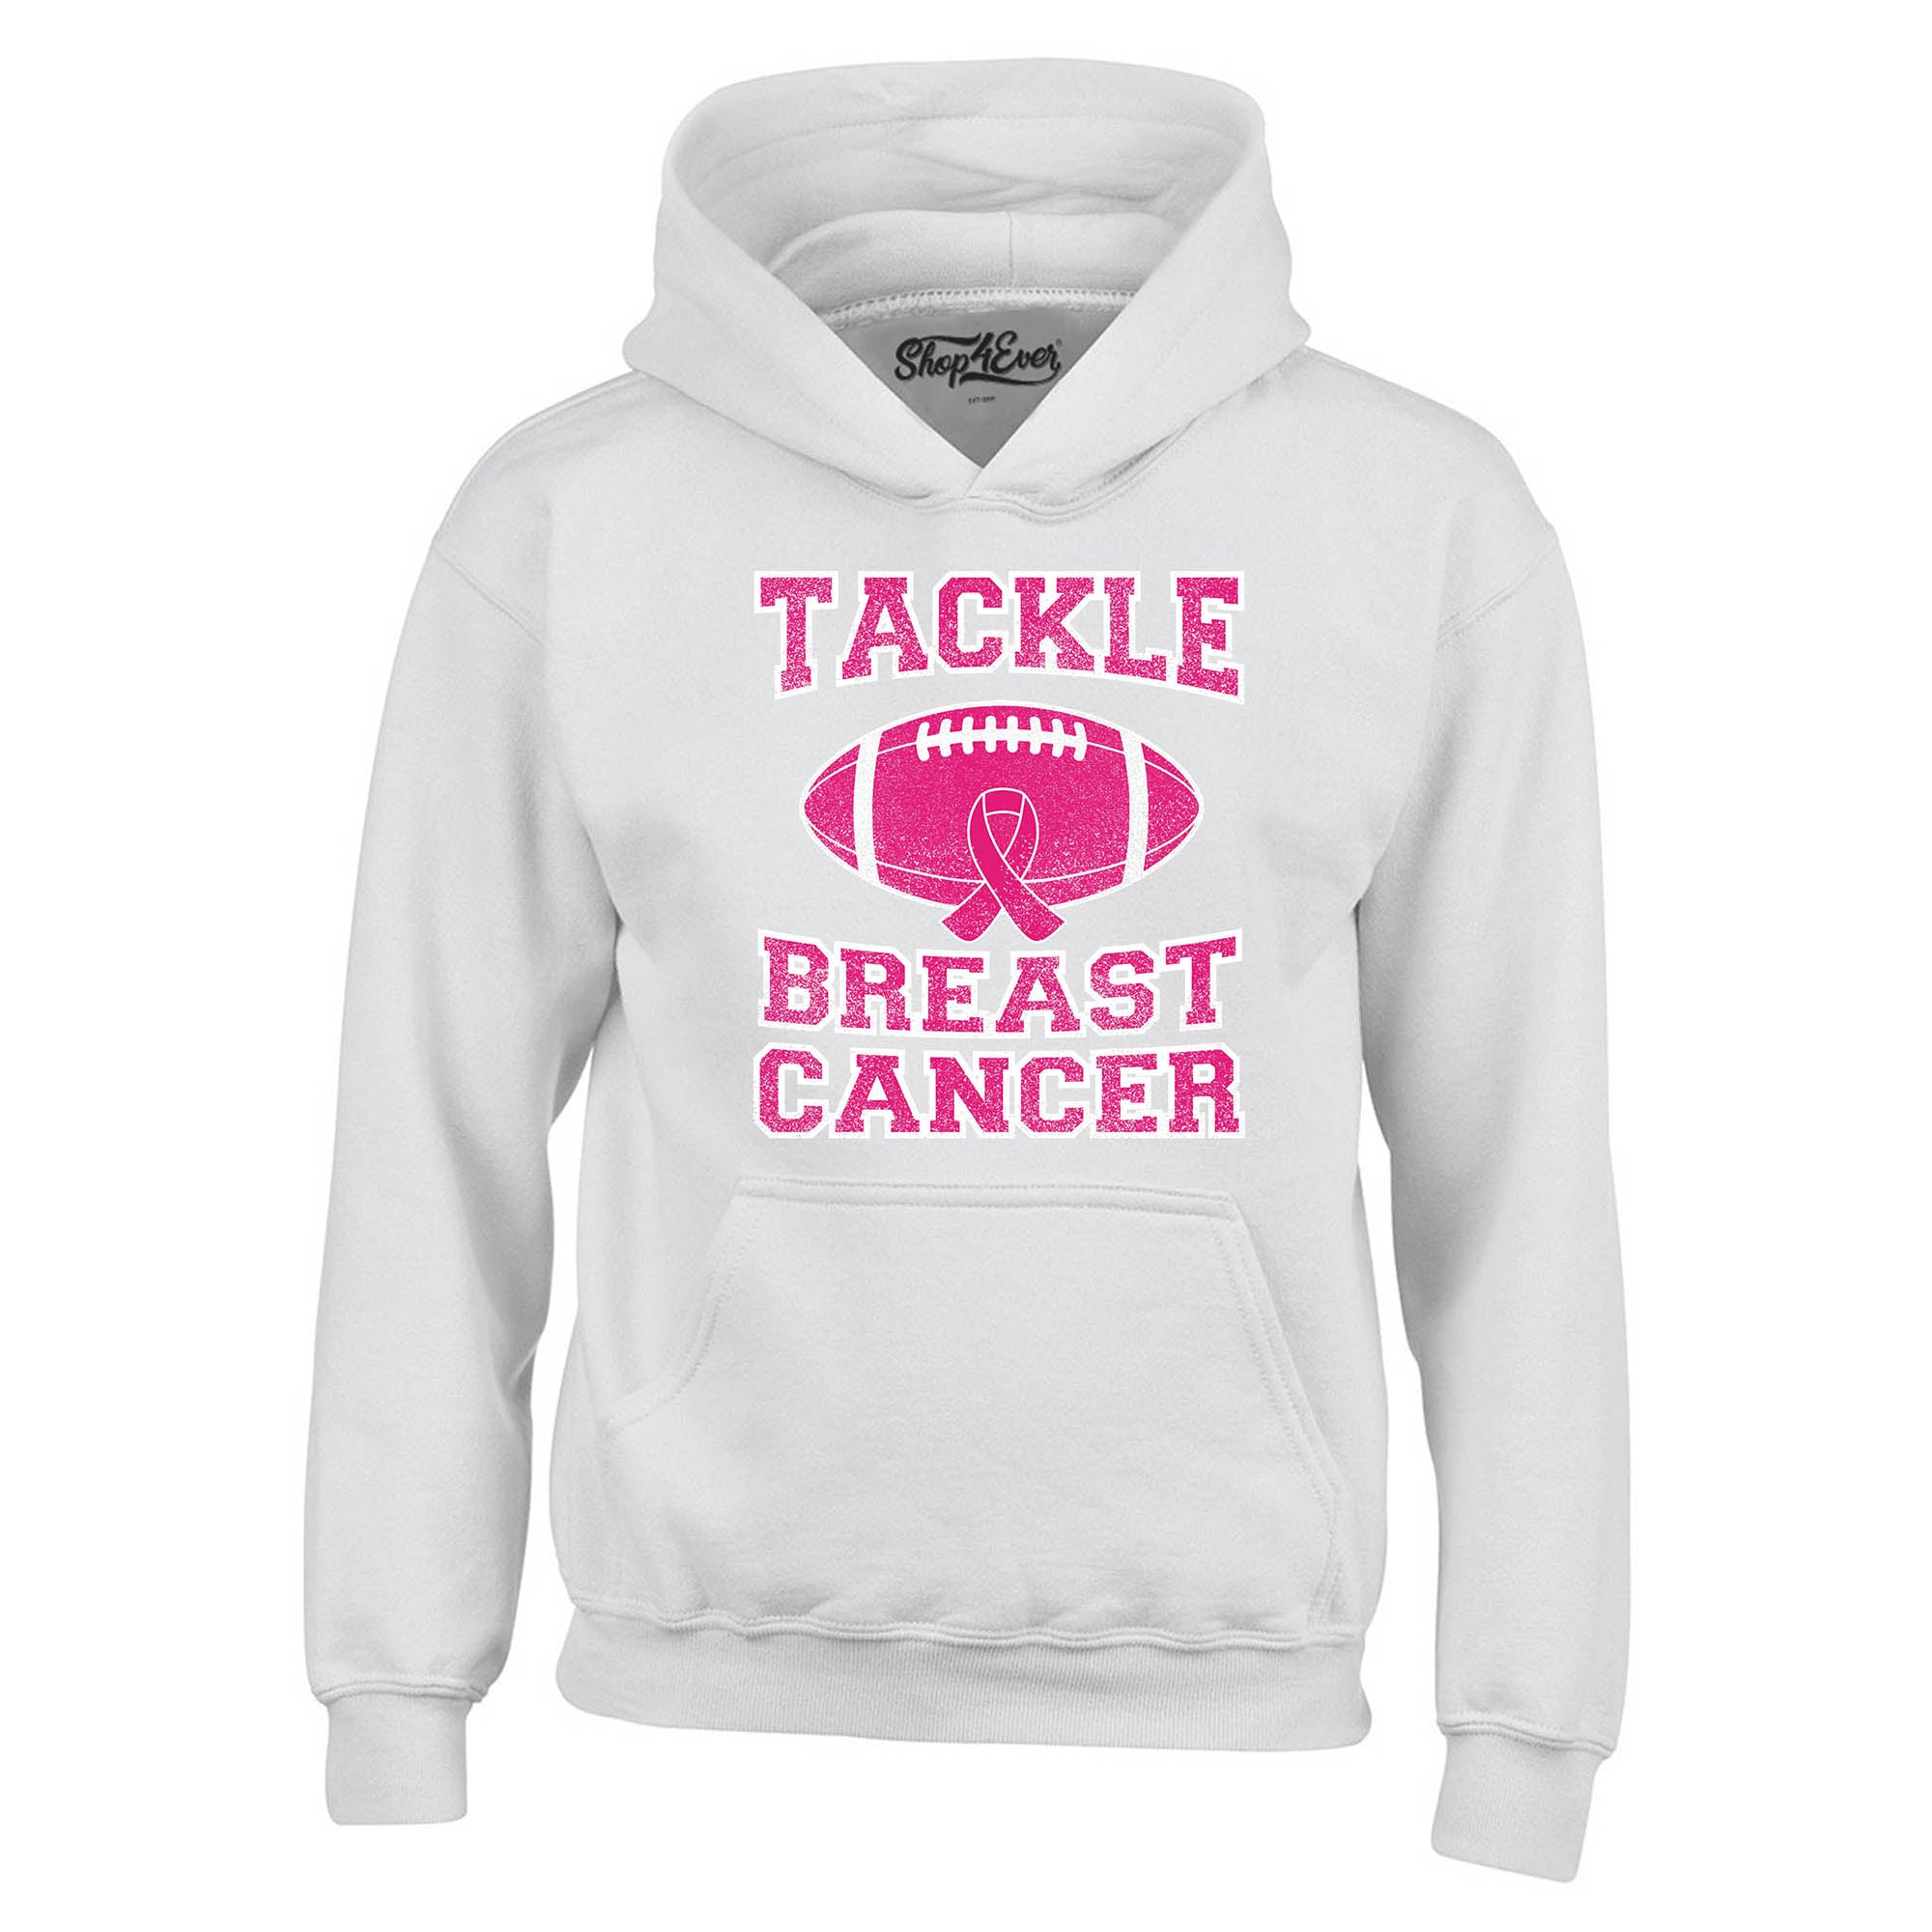 Tackle Breast Cancer Hoodies Breast Cancer Shirts Sweatshirts